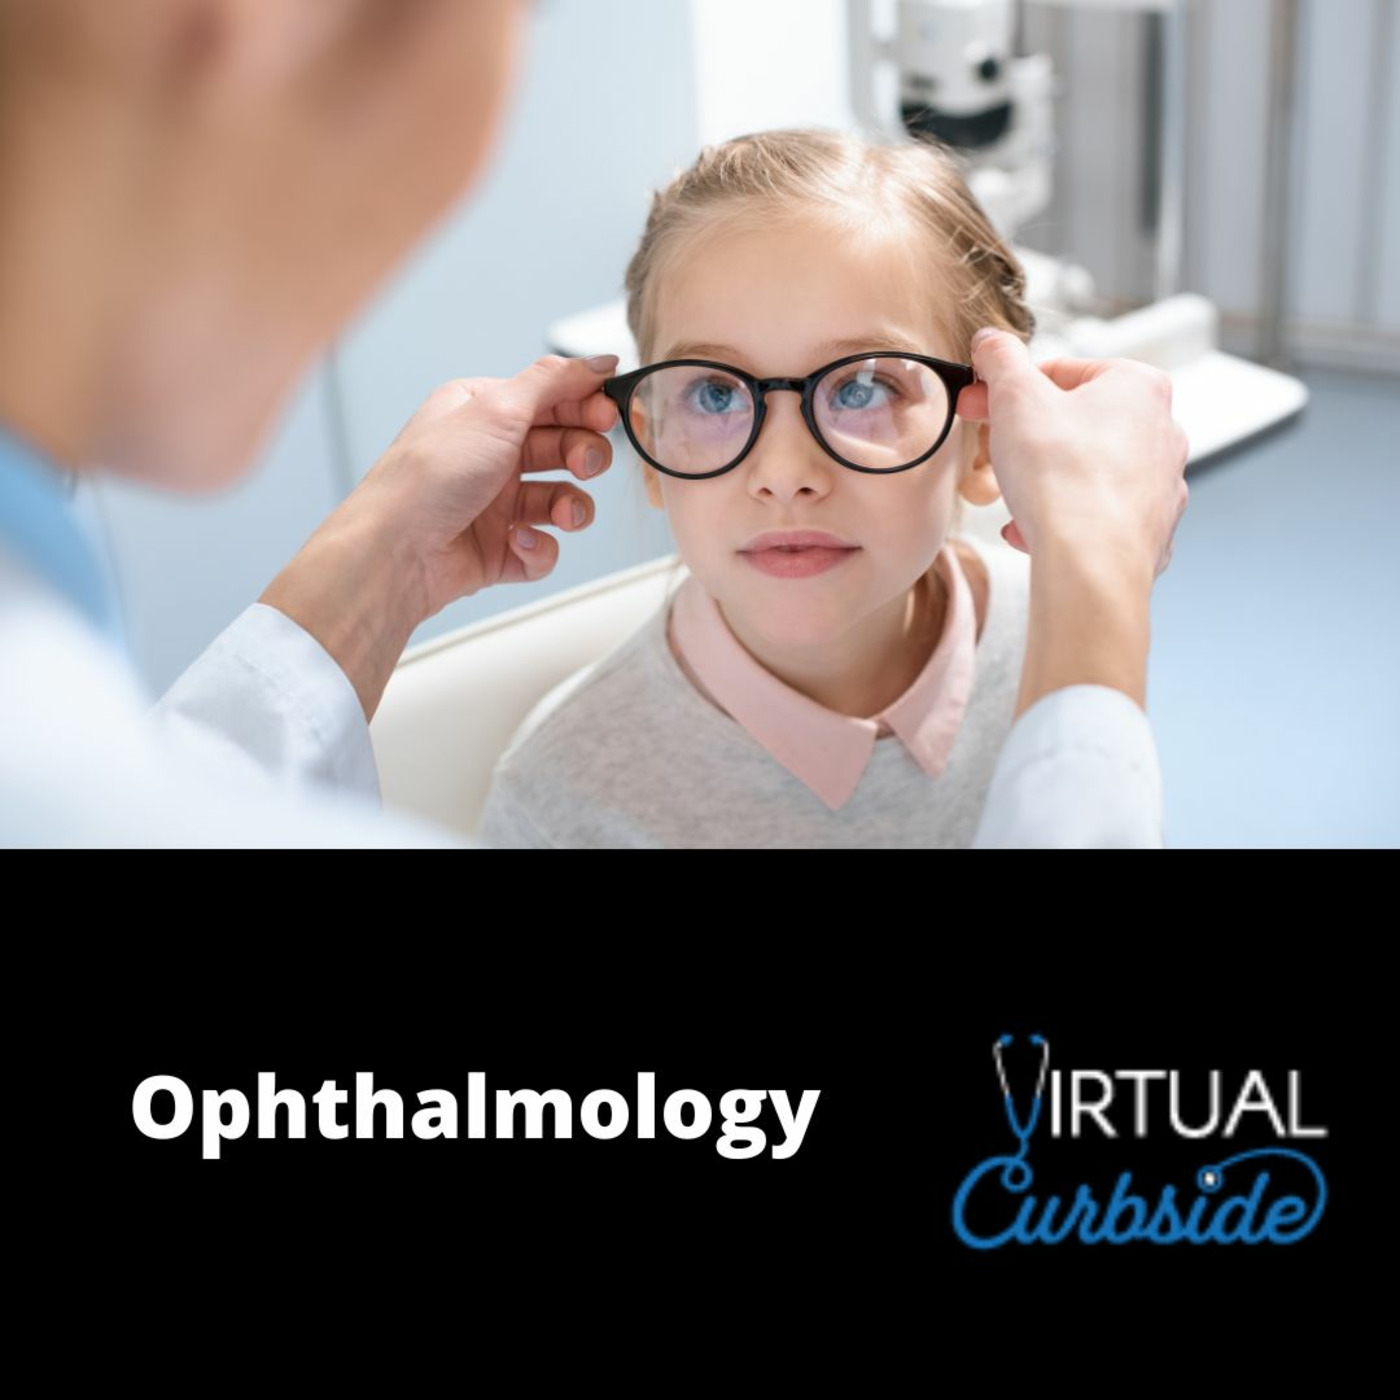 Episode 261: #61-2 Ophthalmology: Vision Development